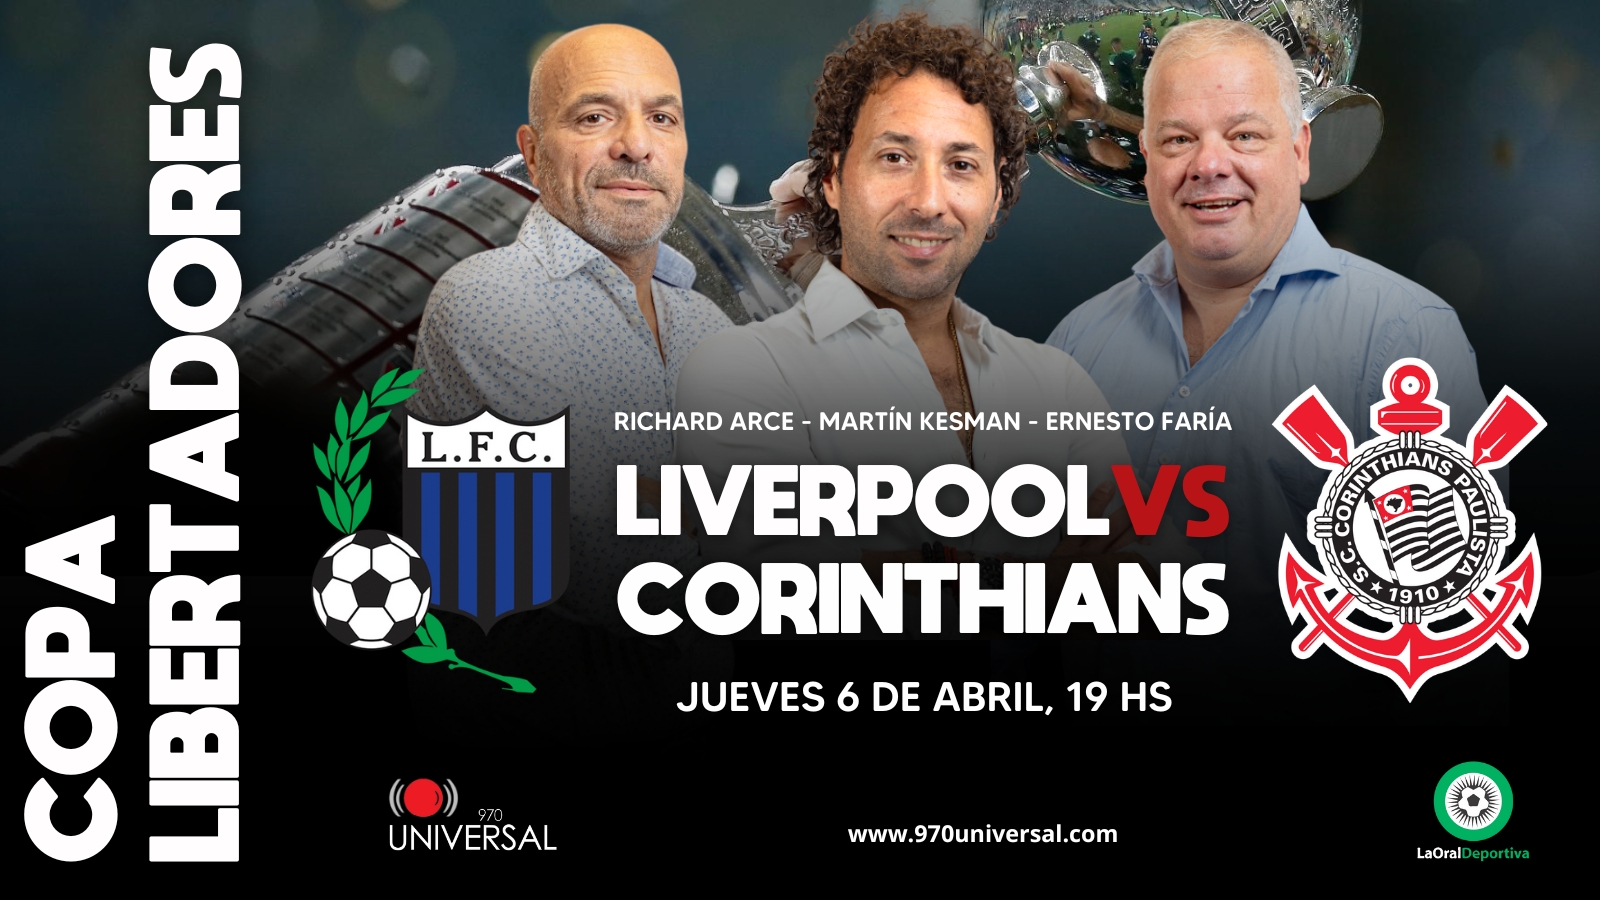 Liverpool 0-3 Corinthians